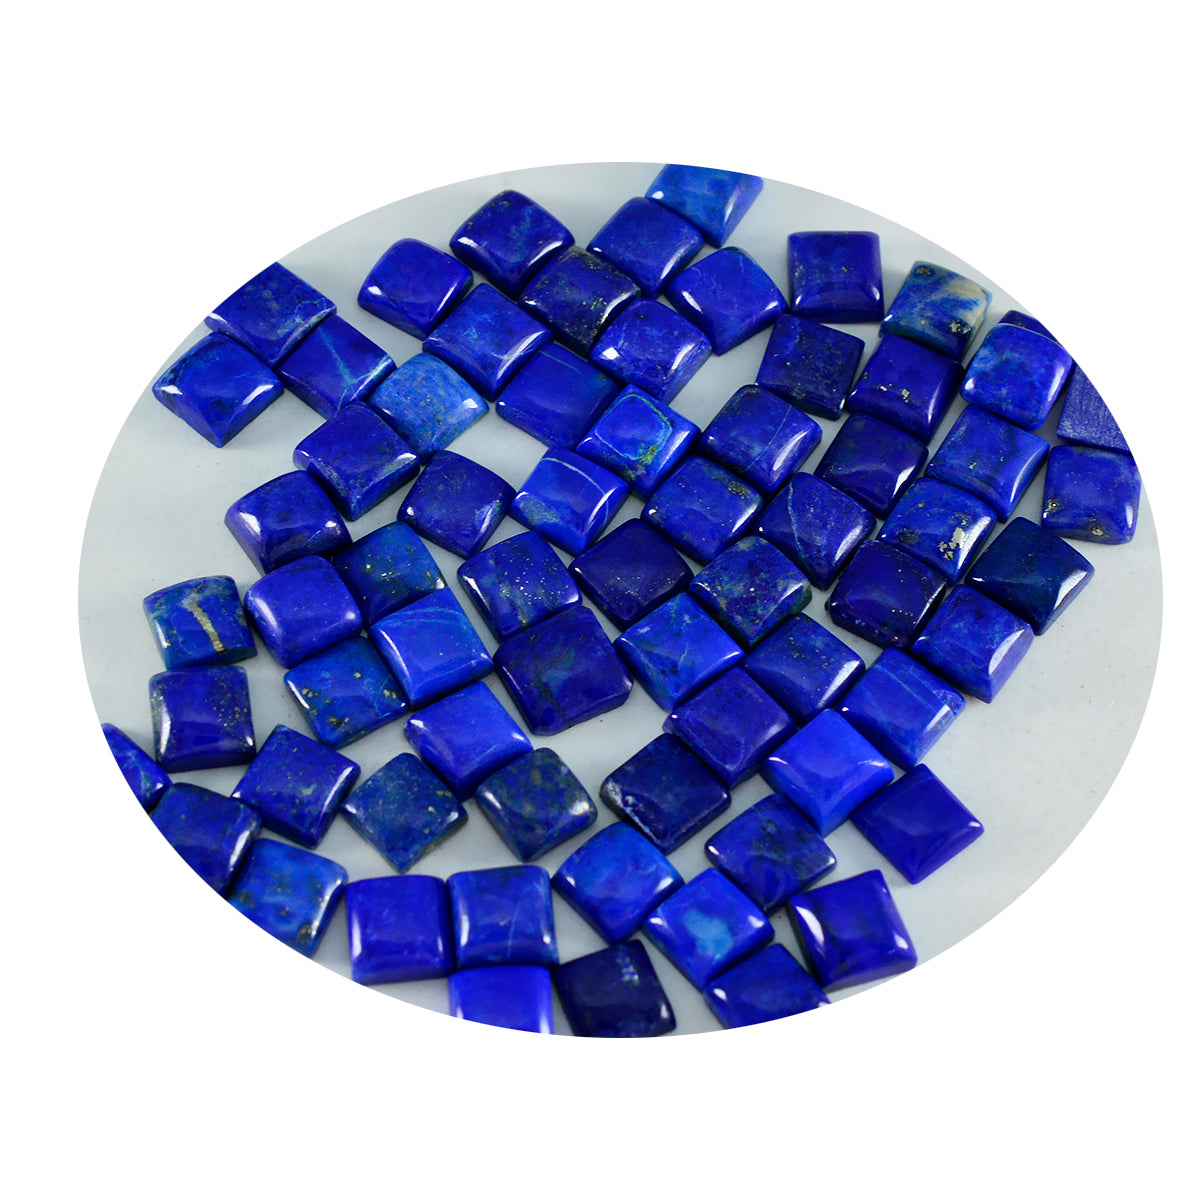 Riyogems 1PC blauwe lapis lazuli cabochon 6x6 mm vierkante vorm geweldige kwaliteitsedelstenen